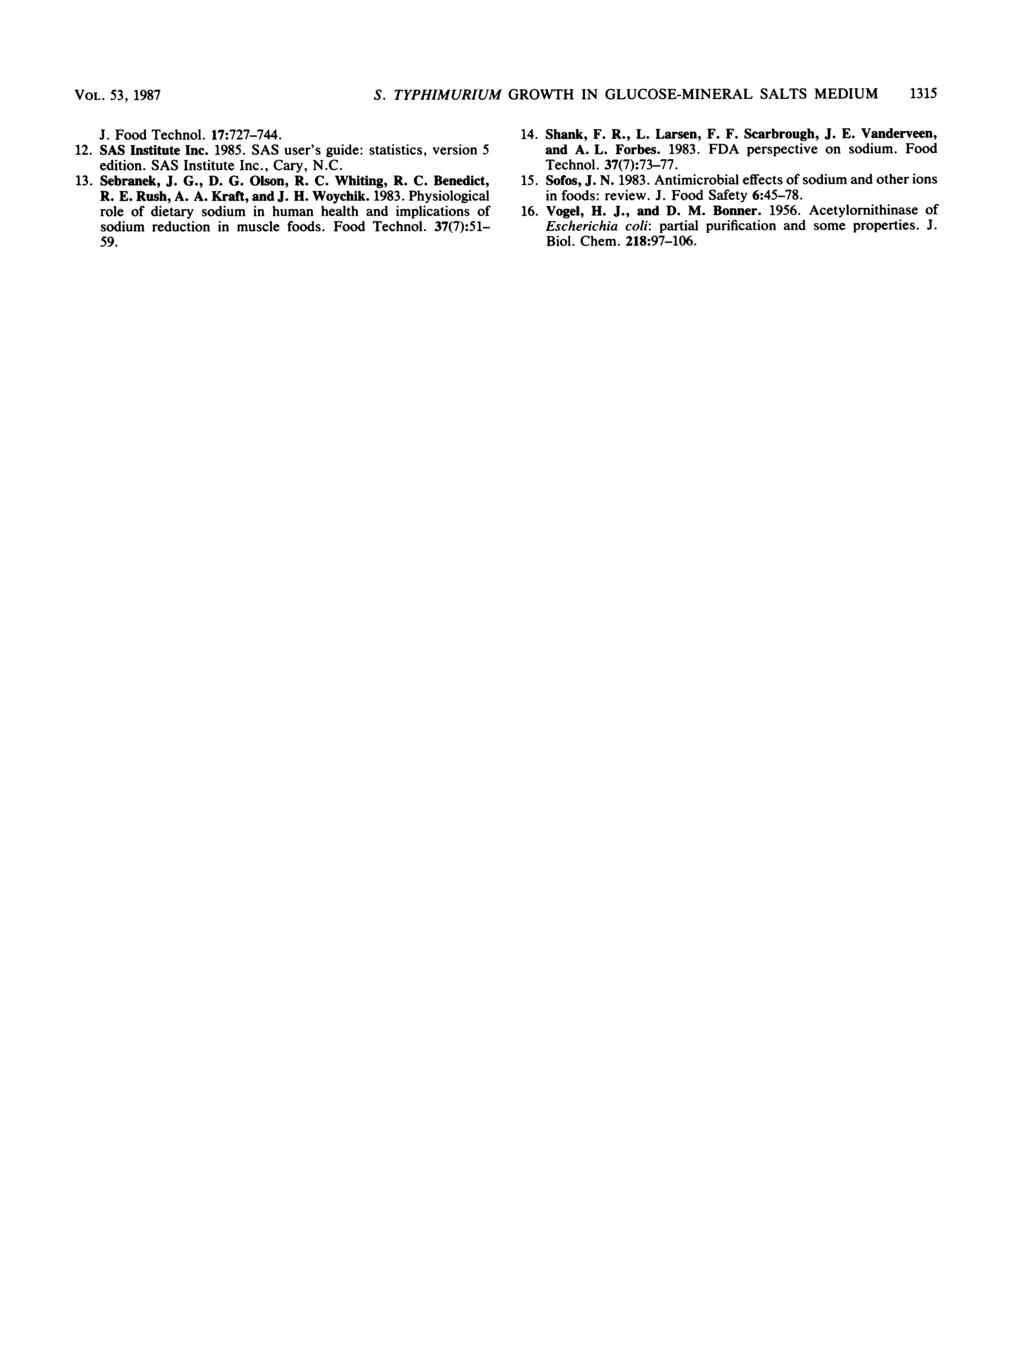 VOL. 53, 1987 S. TYPHIMURIUM GROWTH IN GLUCOSE-MINERAL SALTS MEDIUM 1315 J. Food Technol. 17:727-744. 12. SAS Institute Inc. 1985. SAS user's guide: statistics, version 5 edition. SAS Institute Inc., Cary, N.